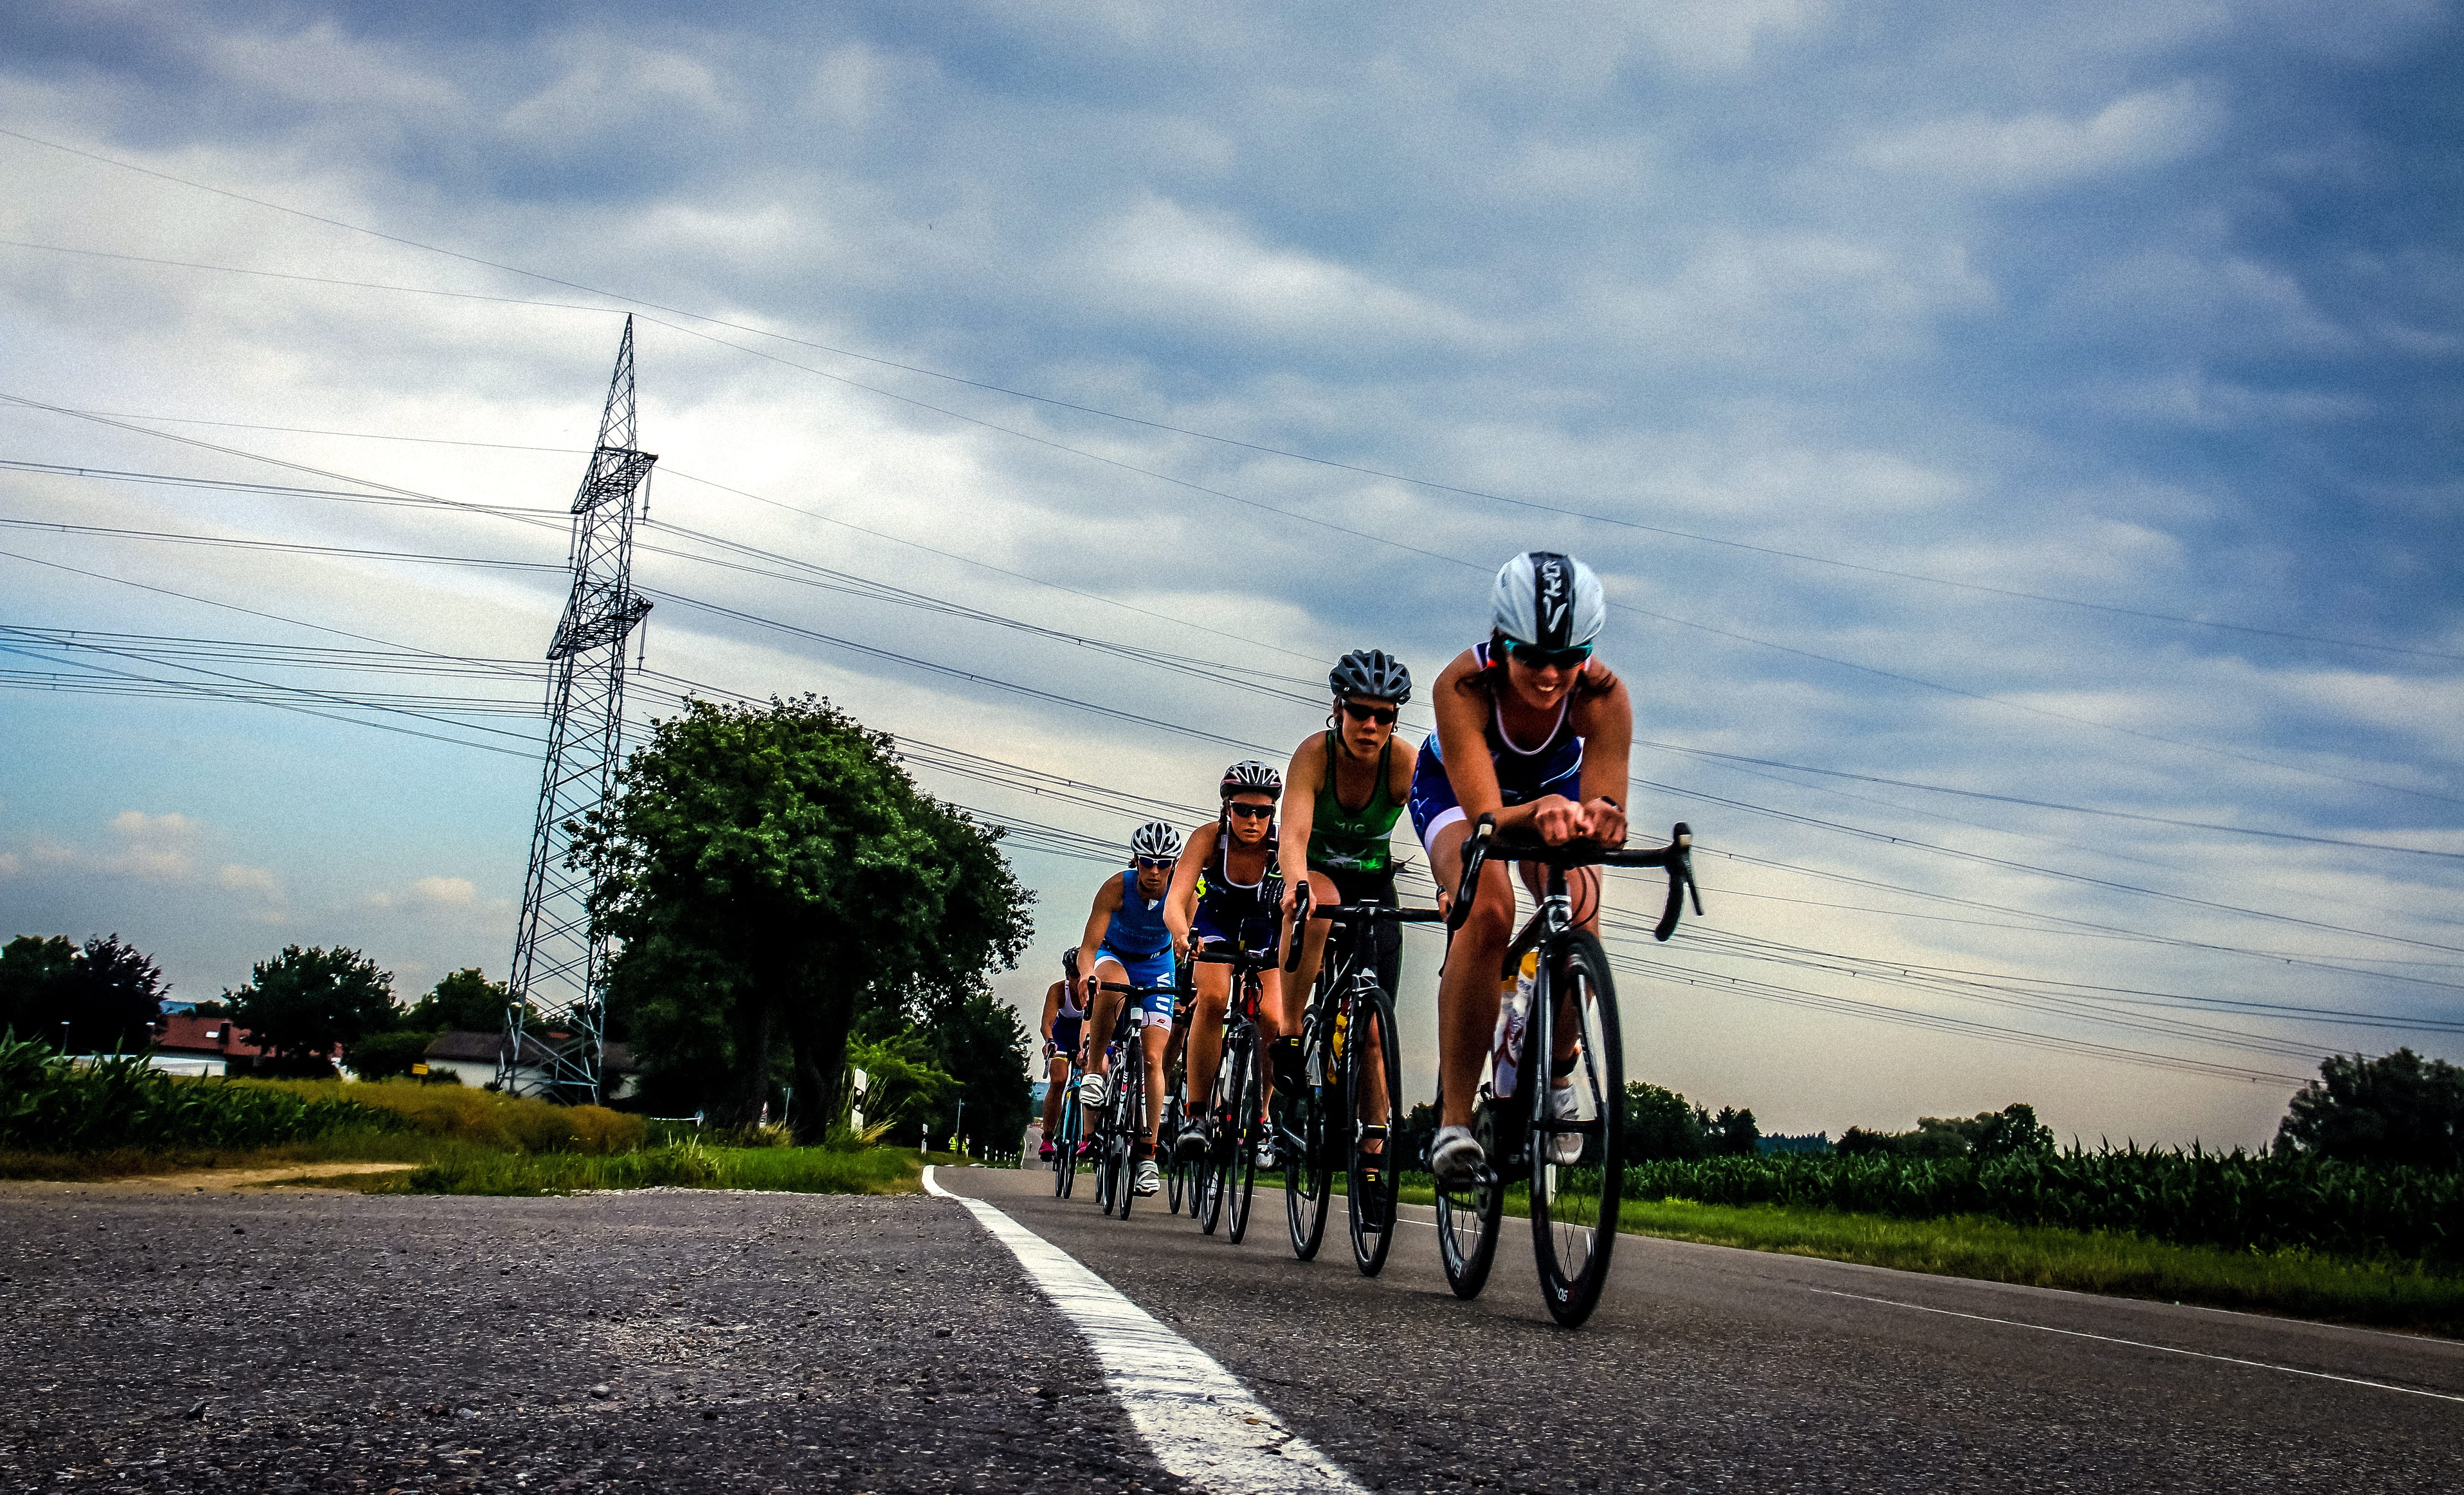 cyclists on road, Triathlon, Road Bike, Triathlete, landscape